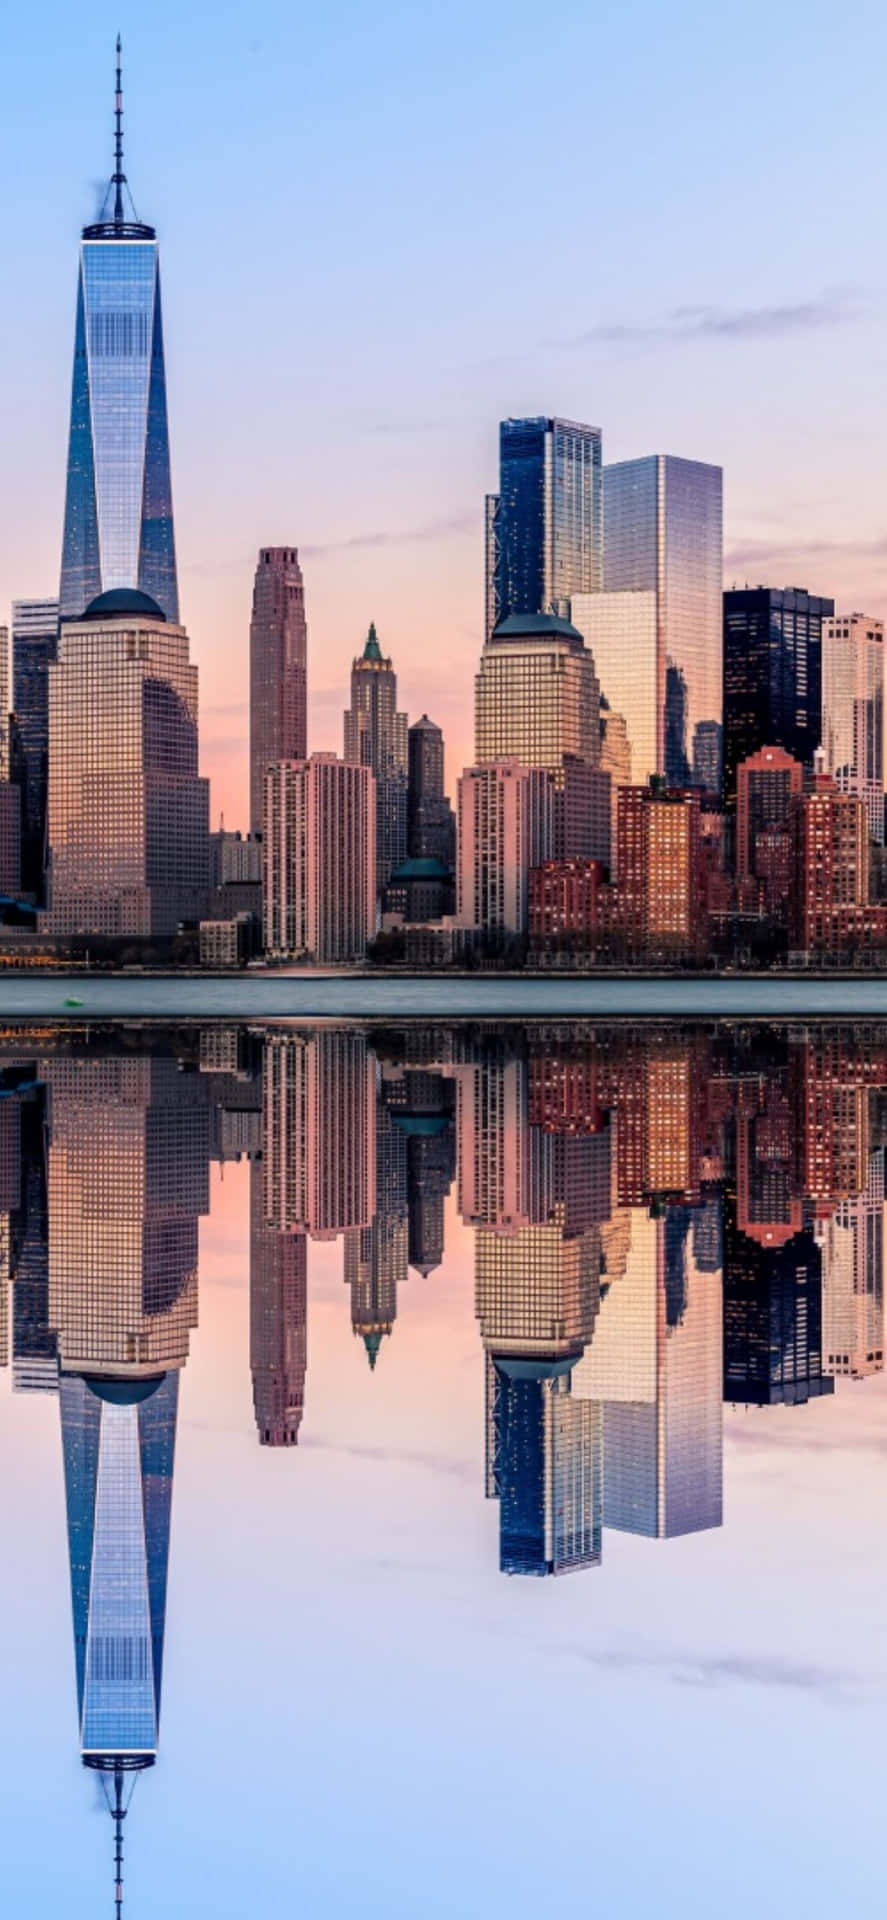 Stunning View Of New York City Skyline Captured On Iphone X Wallpaper